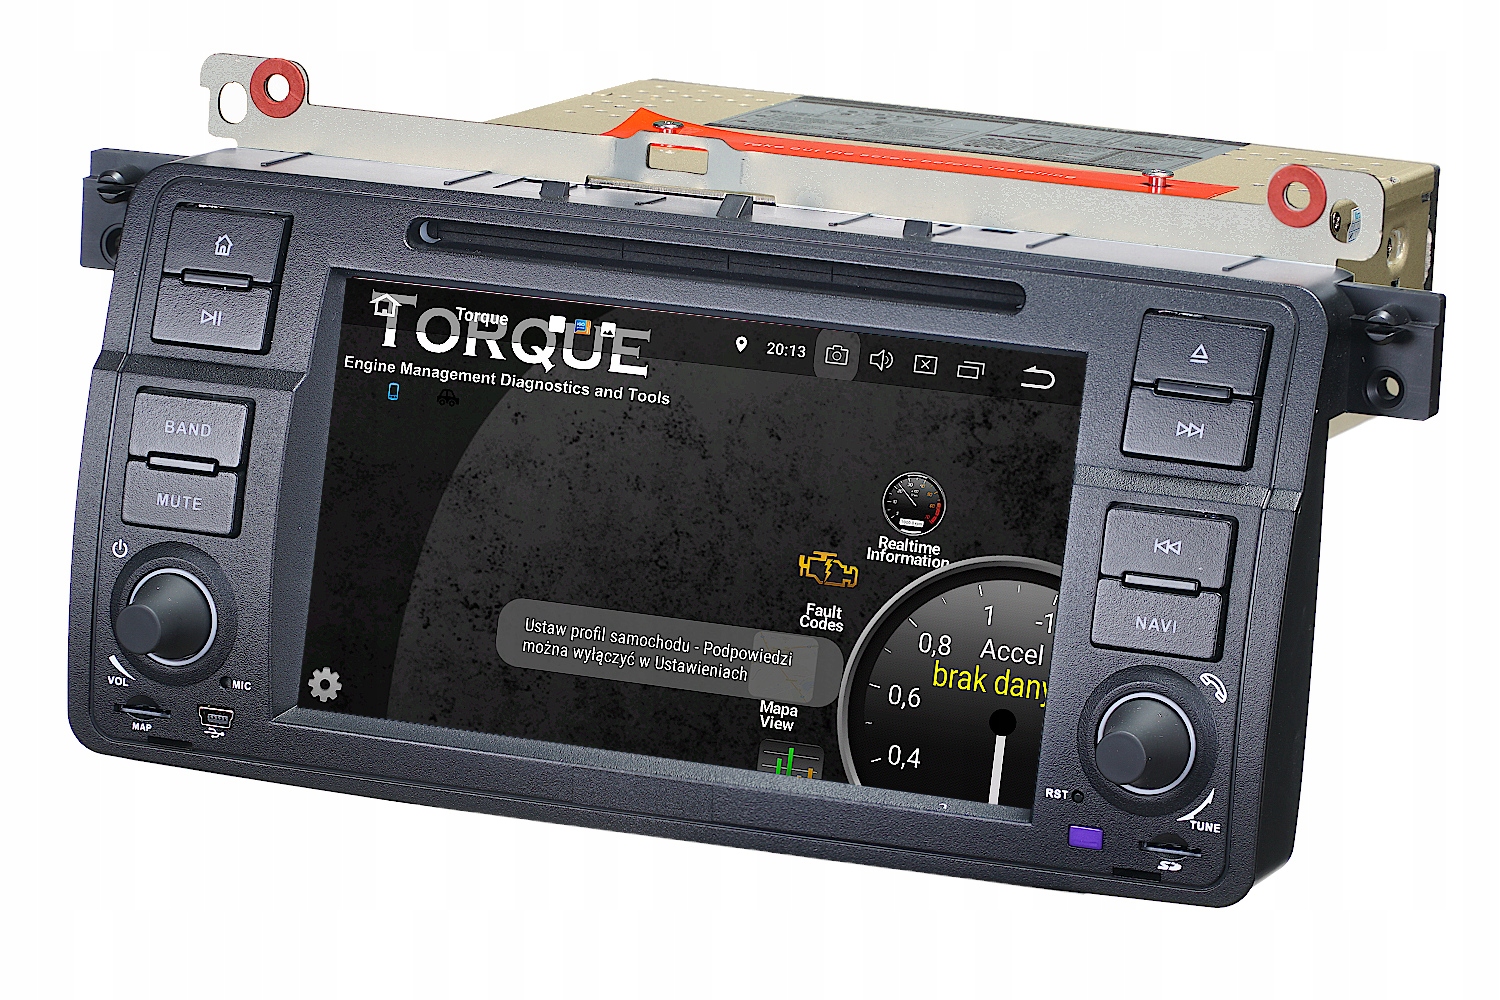 RADIO NAWIGACJA BMW E46 Rover MG ANDROID 7 2GB GPS